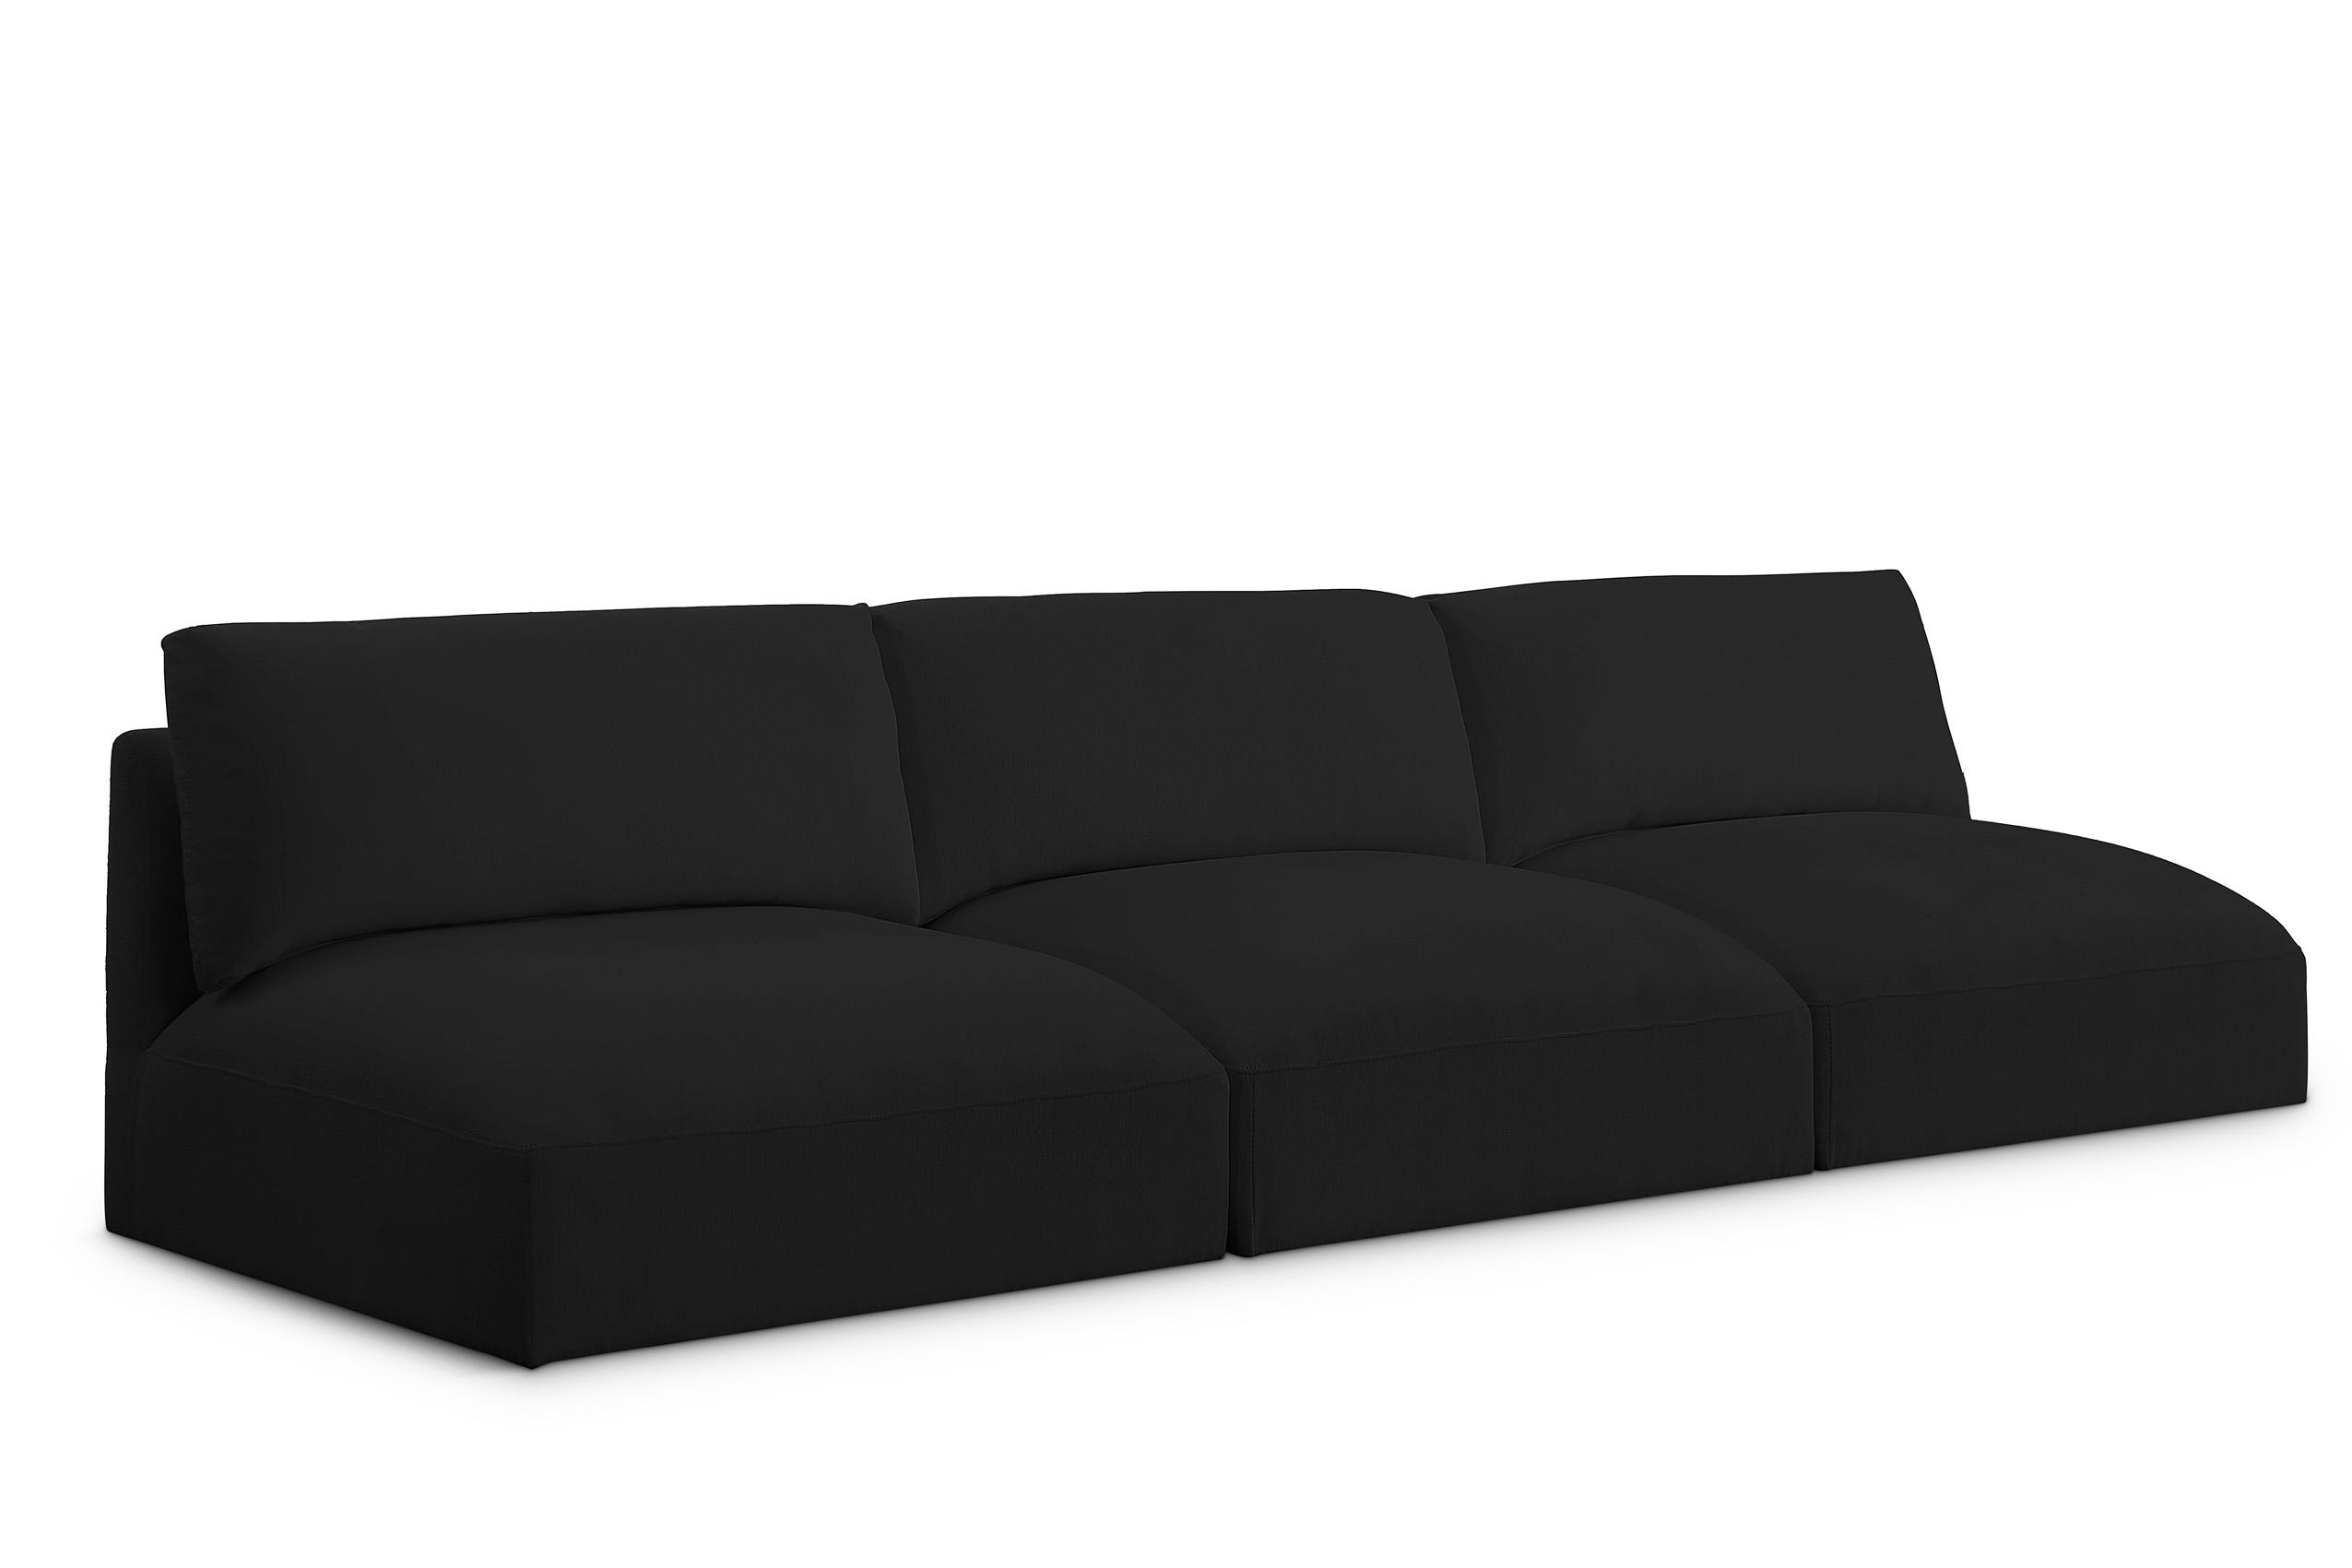 Contemporary, Modern Modular Sofa EASE 696Black-S114A 696Black-S114A in Black Fabric